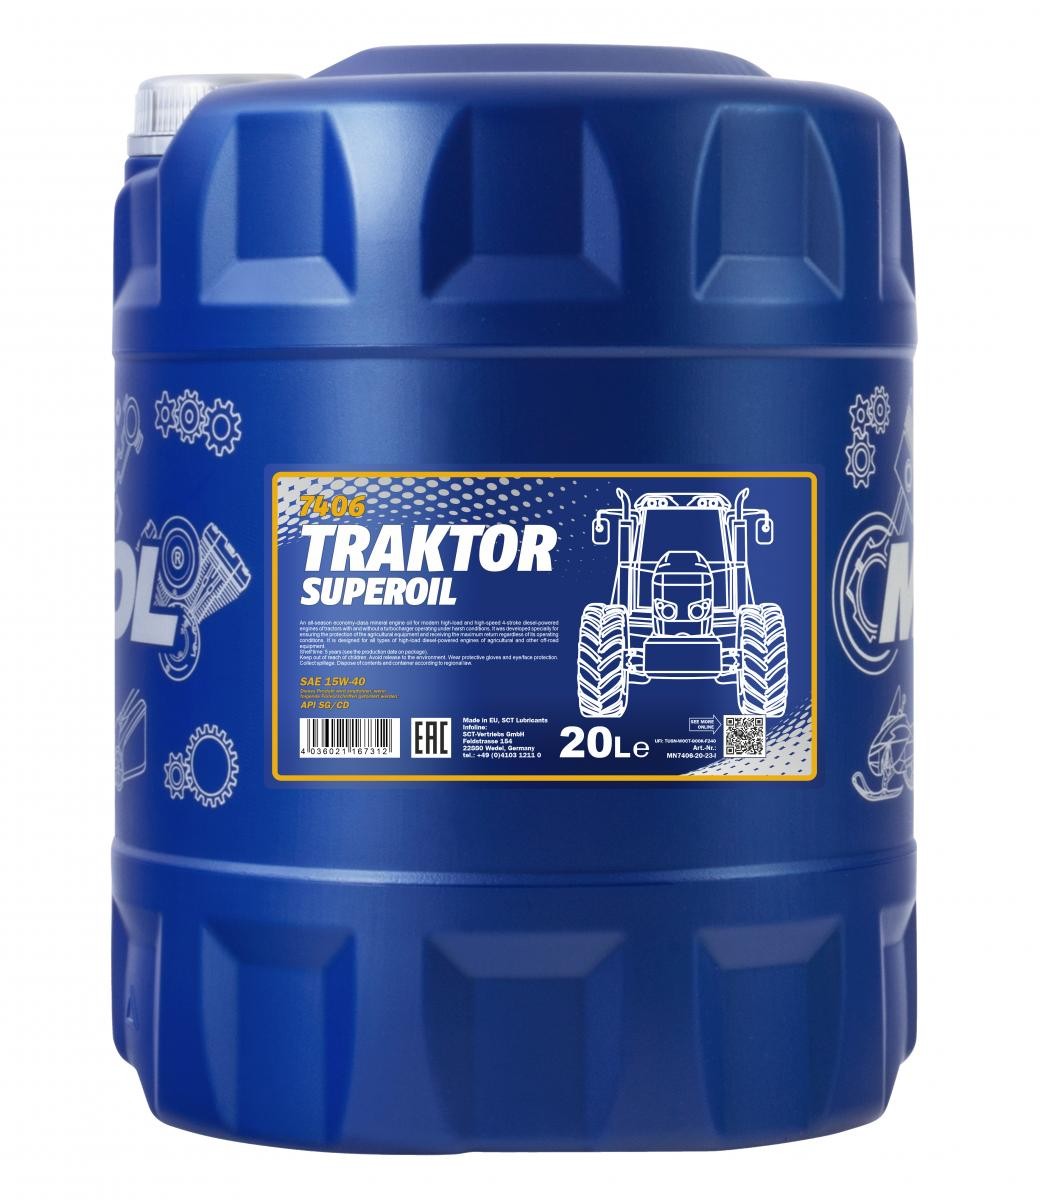 MANNOL Traktor, Superoil 15W-40, 20l, Mineralöl Motoröl MN7406-20 kaufen